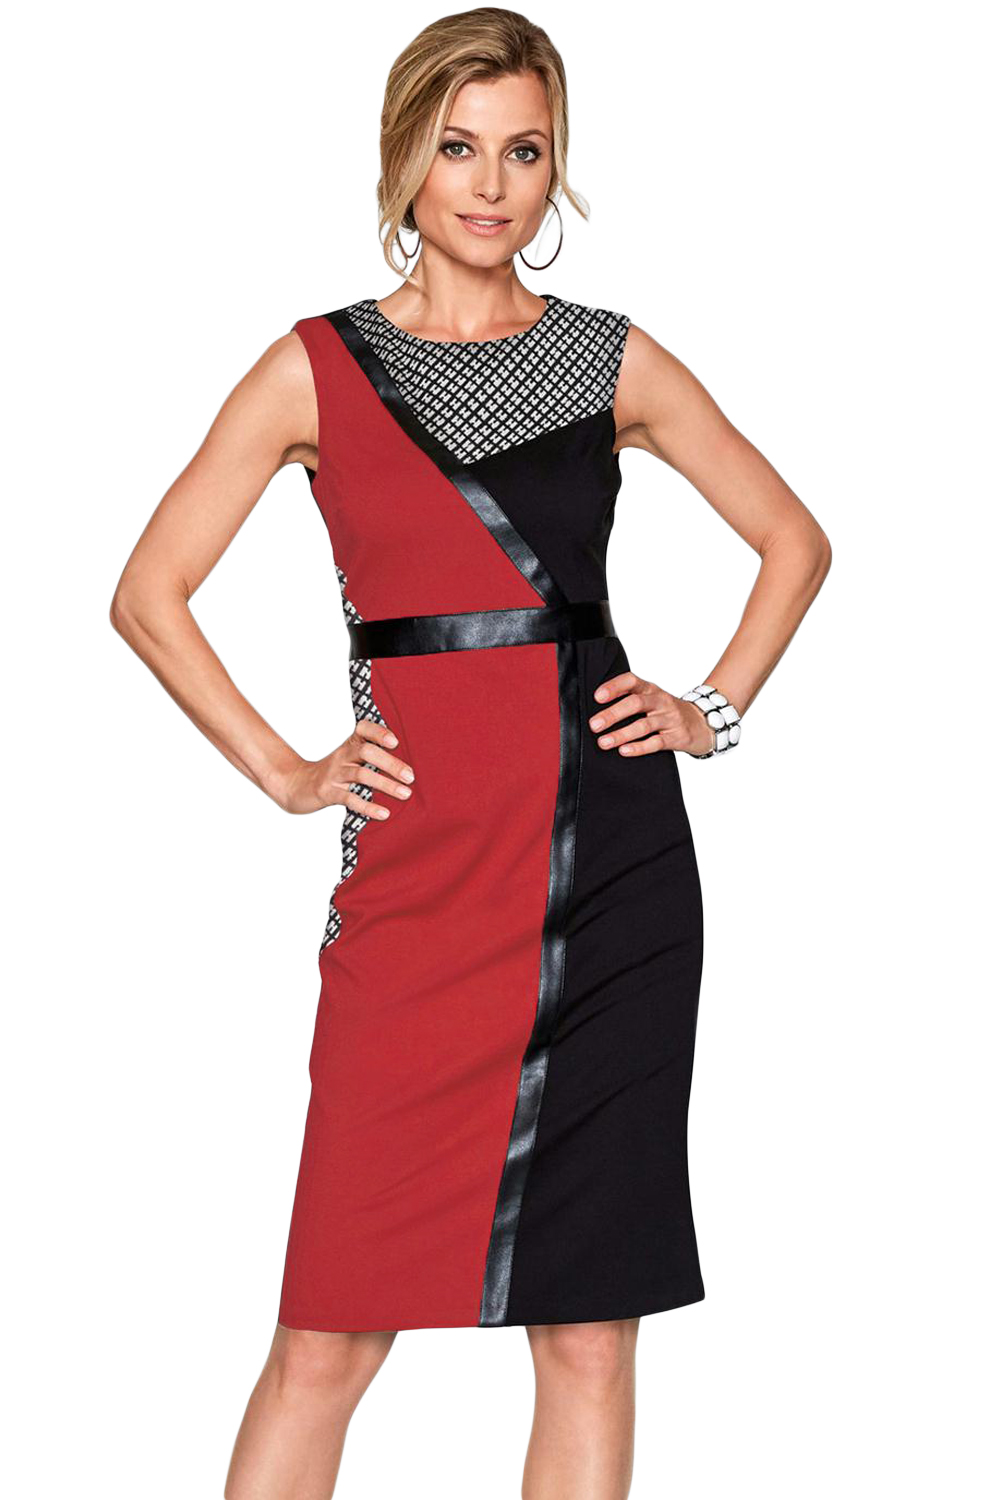 BY220550-2 Red Black Asymmetric Patchwork Leather Trim Sheath Dress